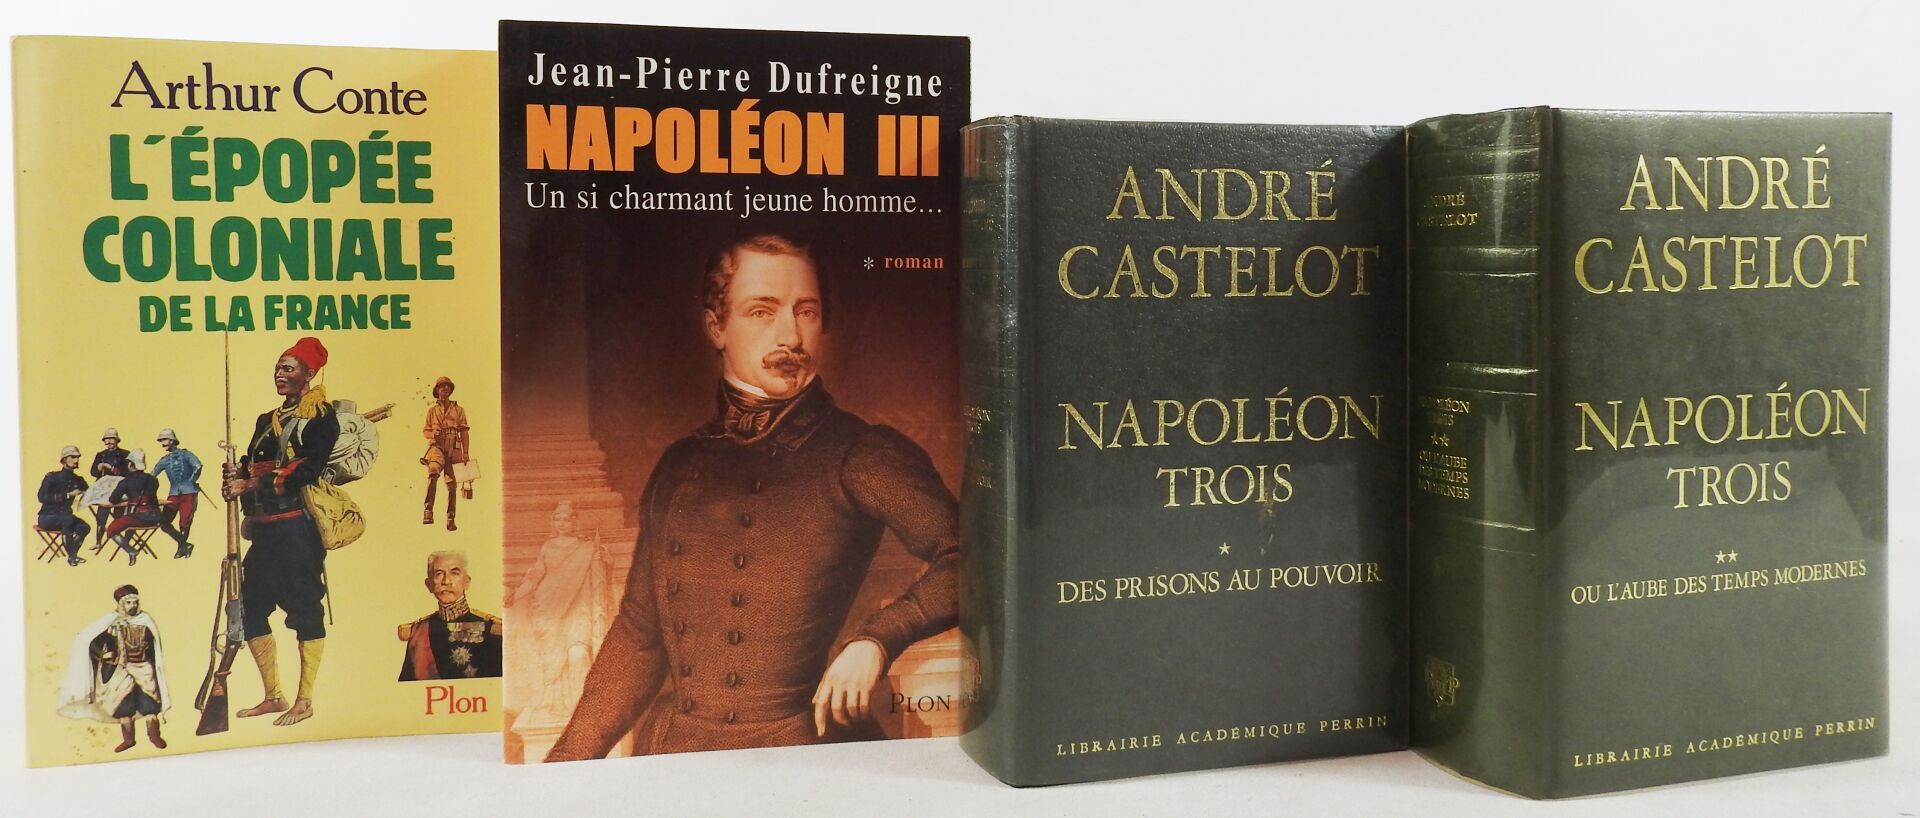 Null 拿破仑三世--4卷

*André CASTELOT:

第一卷：从监狱到权力 - 700页。- 巴黎大学出版社1973年出版的《Librairie &hellip;